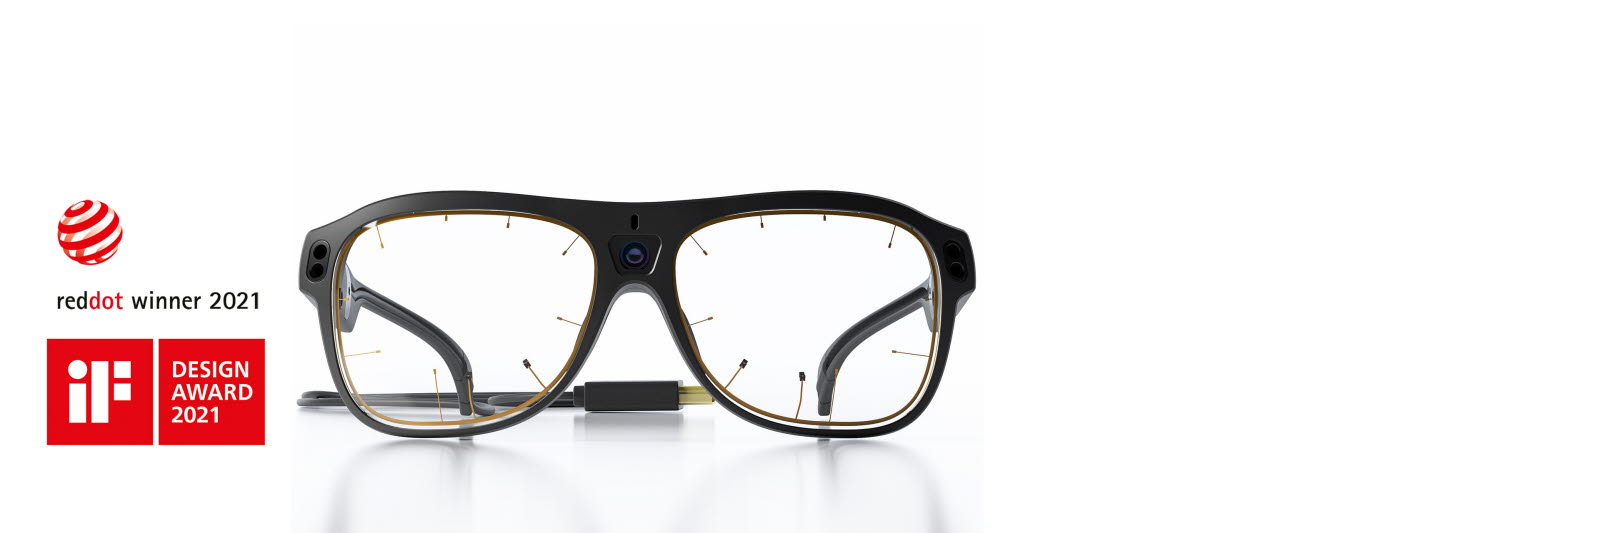 Tobii Pro Glasses 3 - IF Design award and Reddot Winner 2021